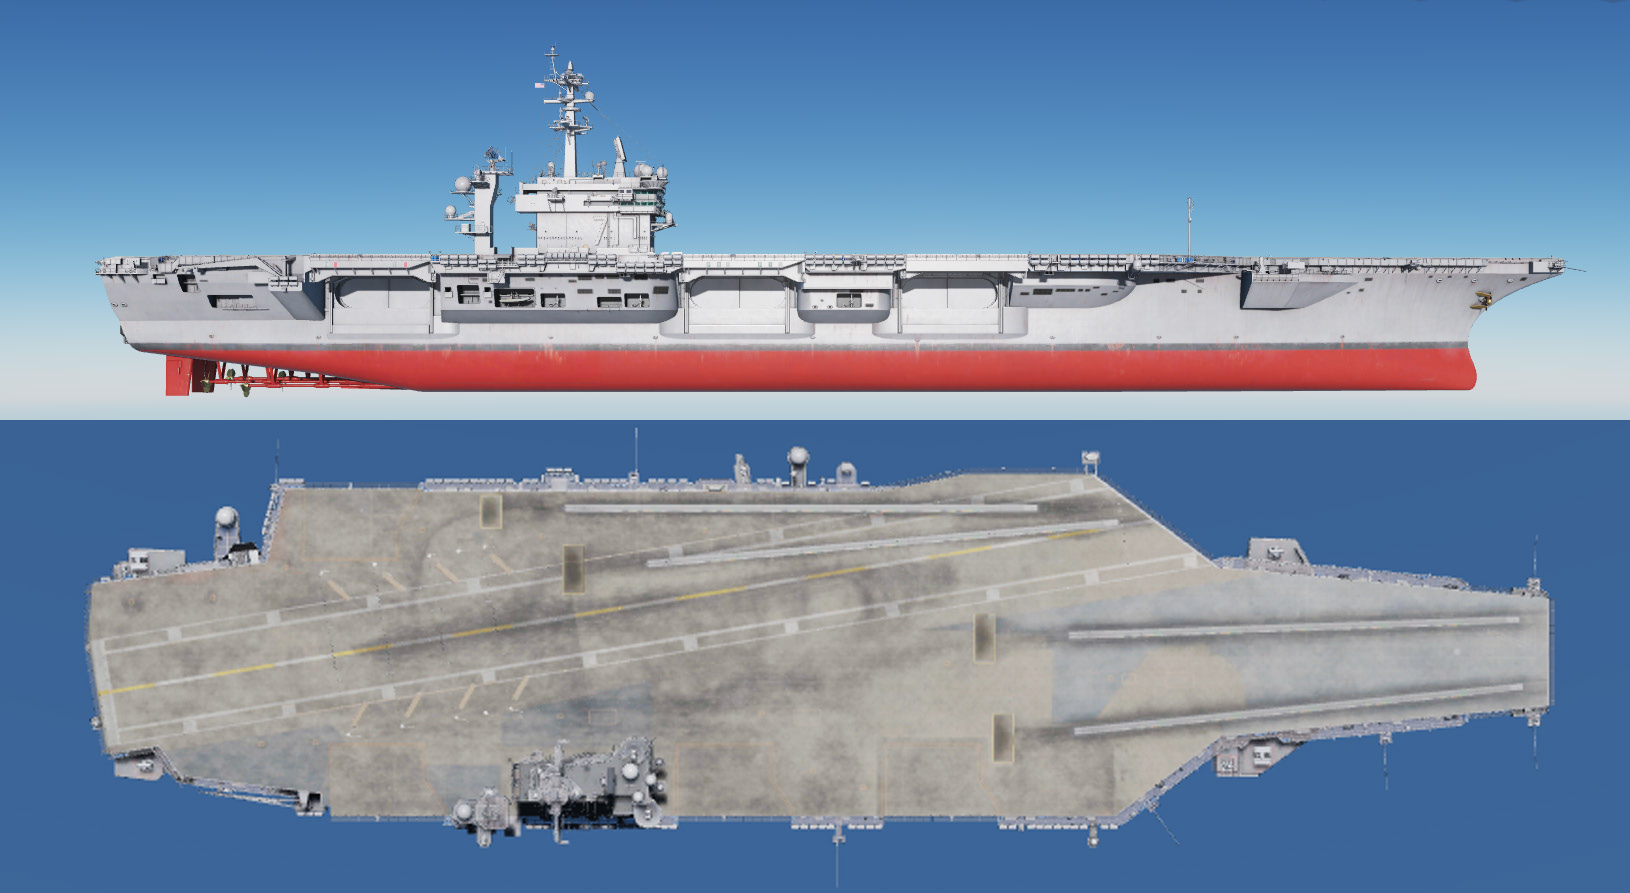 Metall Blatt Vorurteil aircraft carrier deck layout Mädchen Trivial Bürste